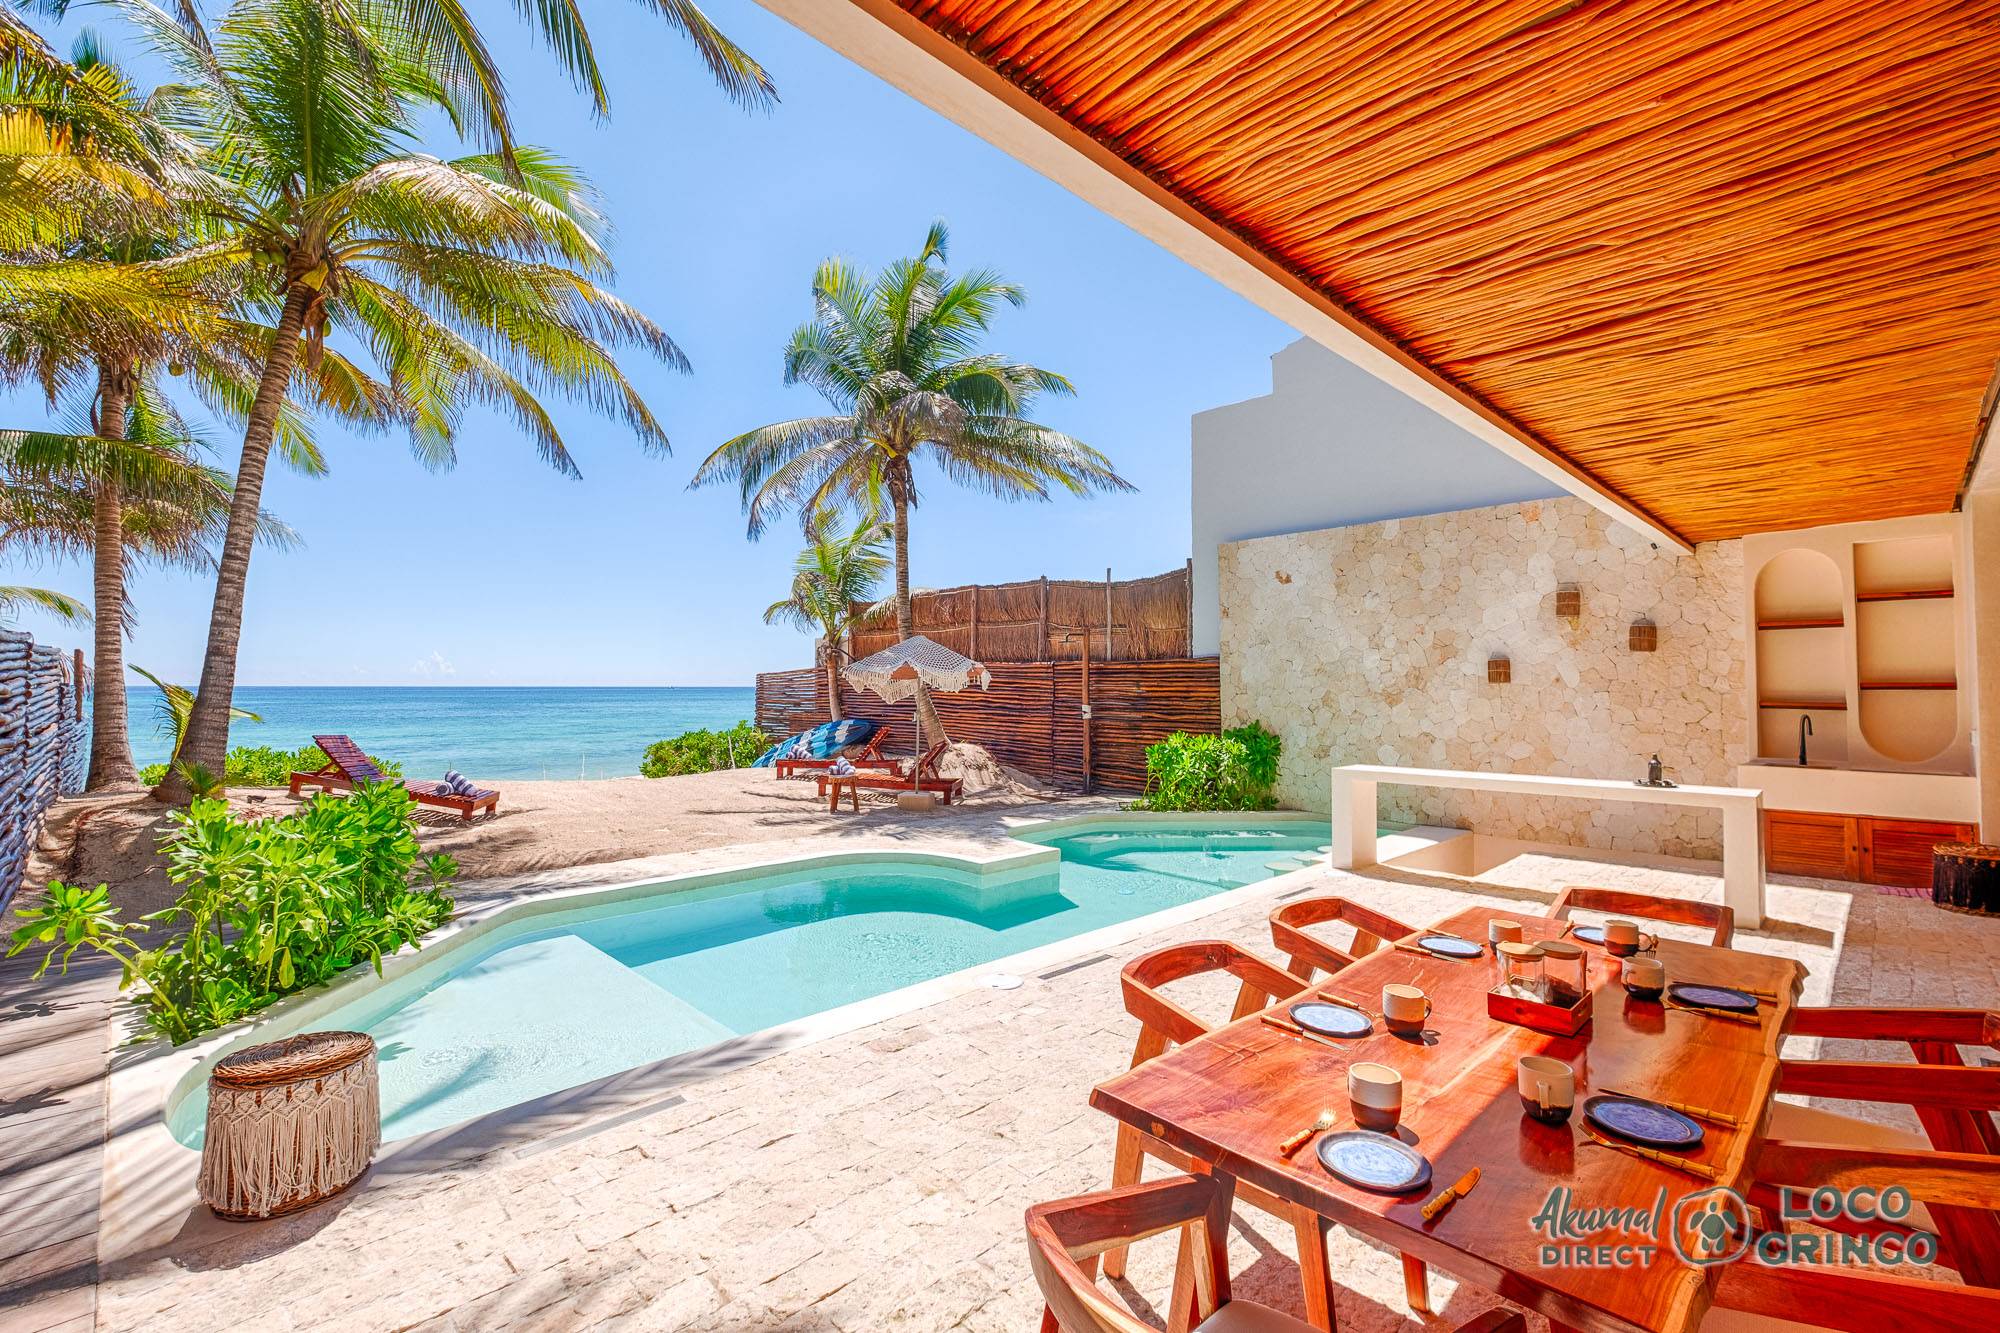 Five stunning Villa Rentals Ideal for Yoga Retreats in Mexico!